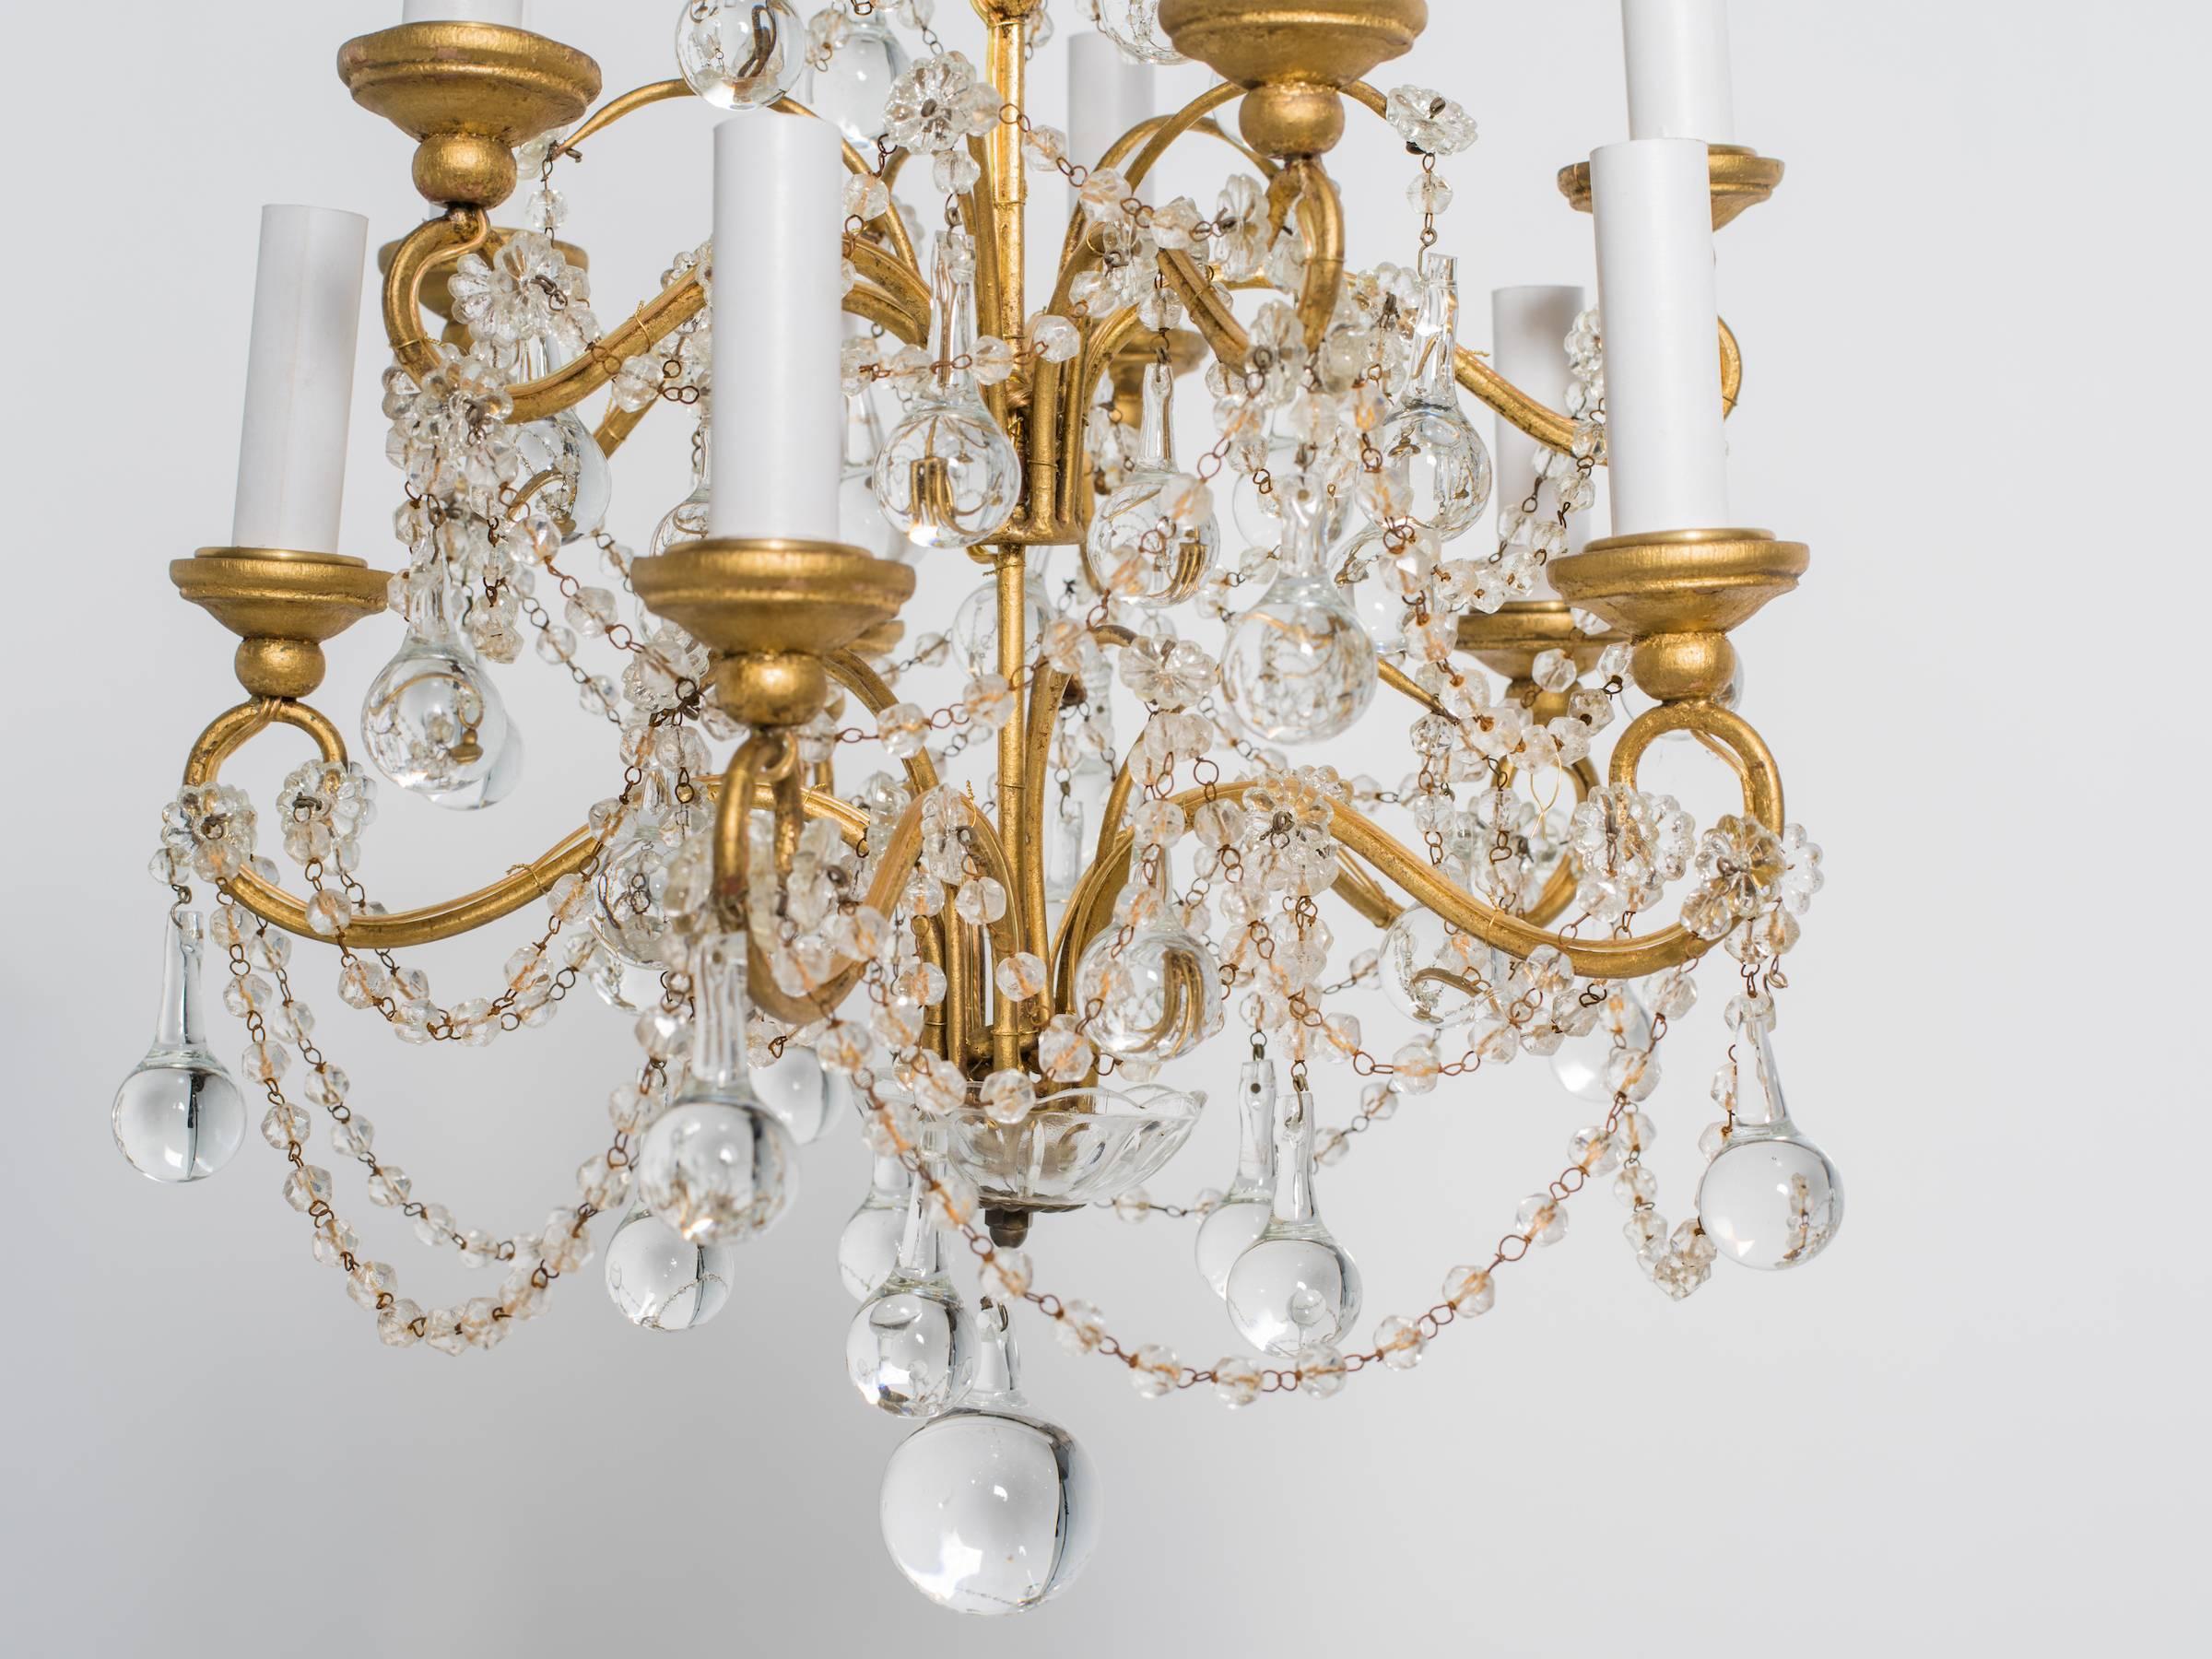 Italian 1960s chandelier dripping in crystal balls.